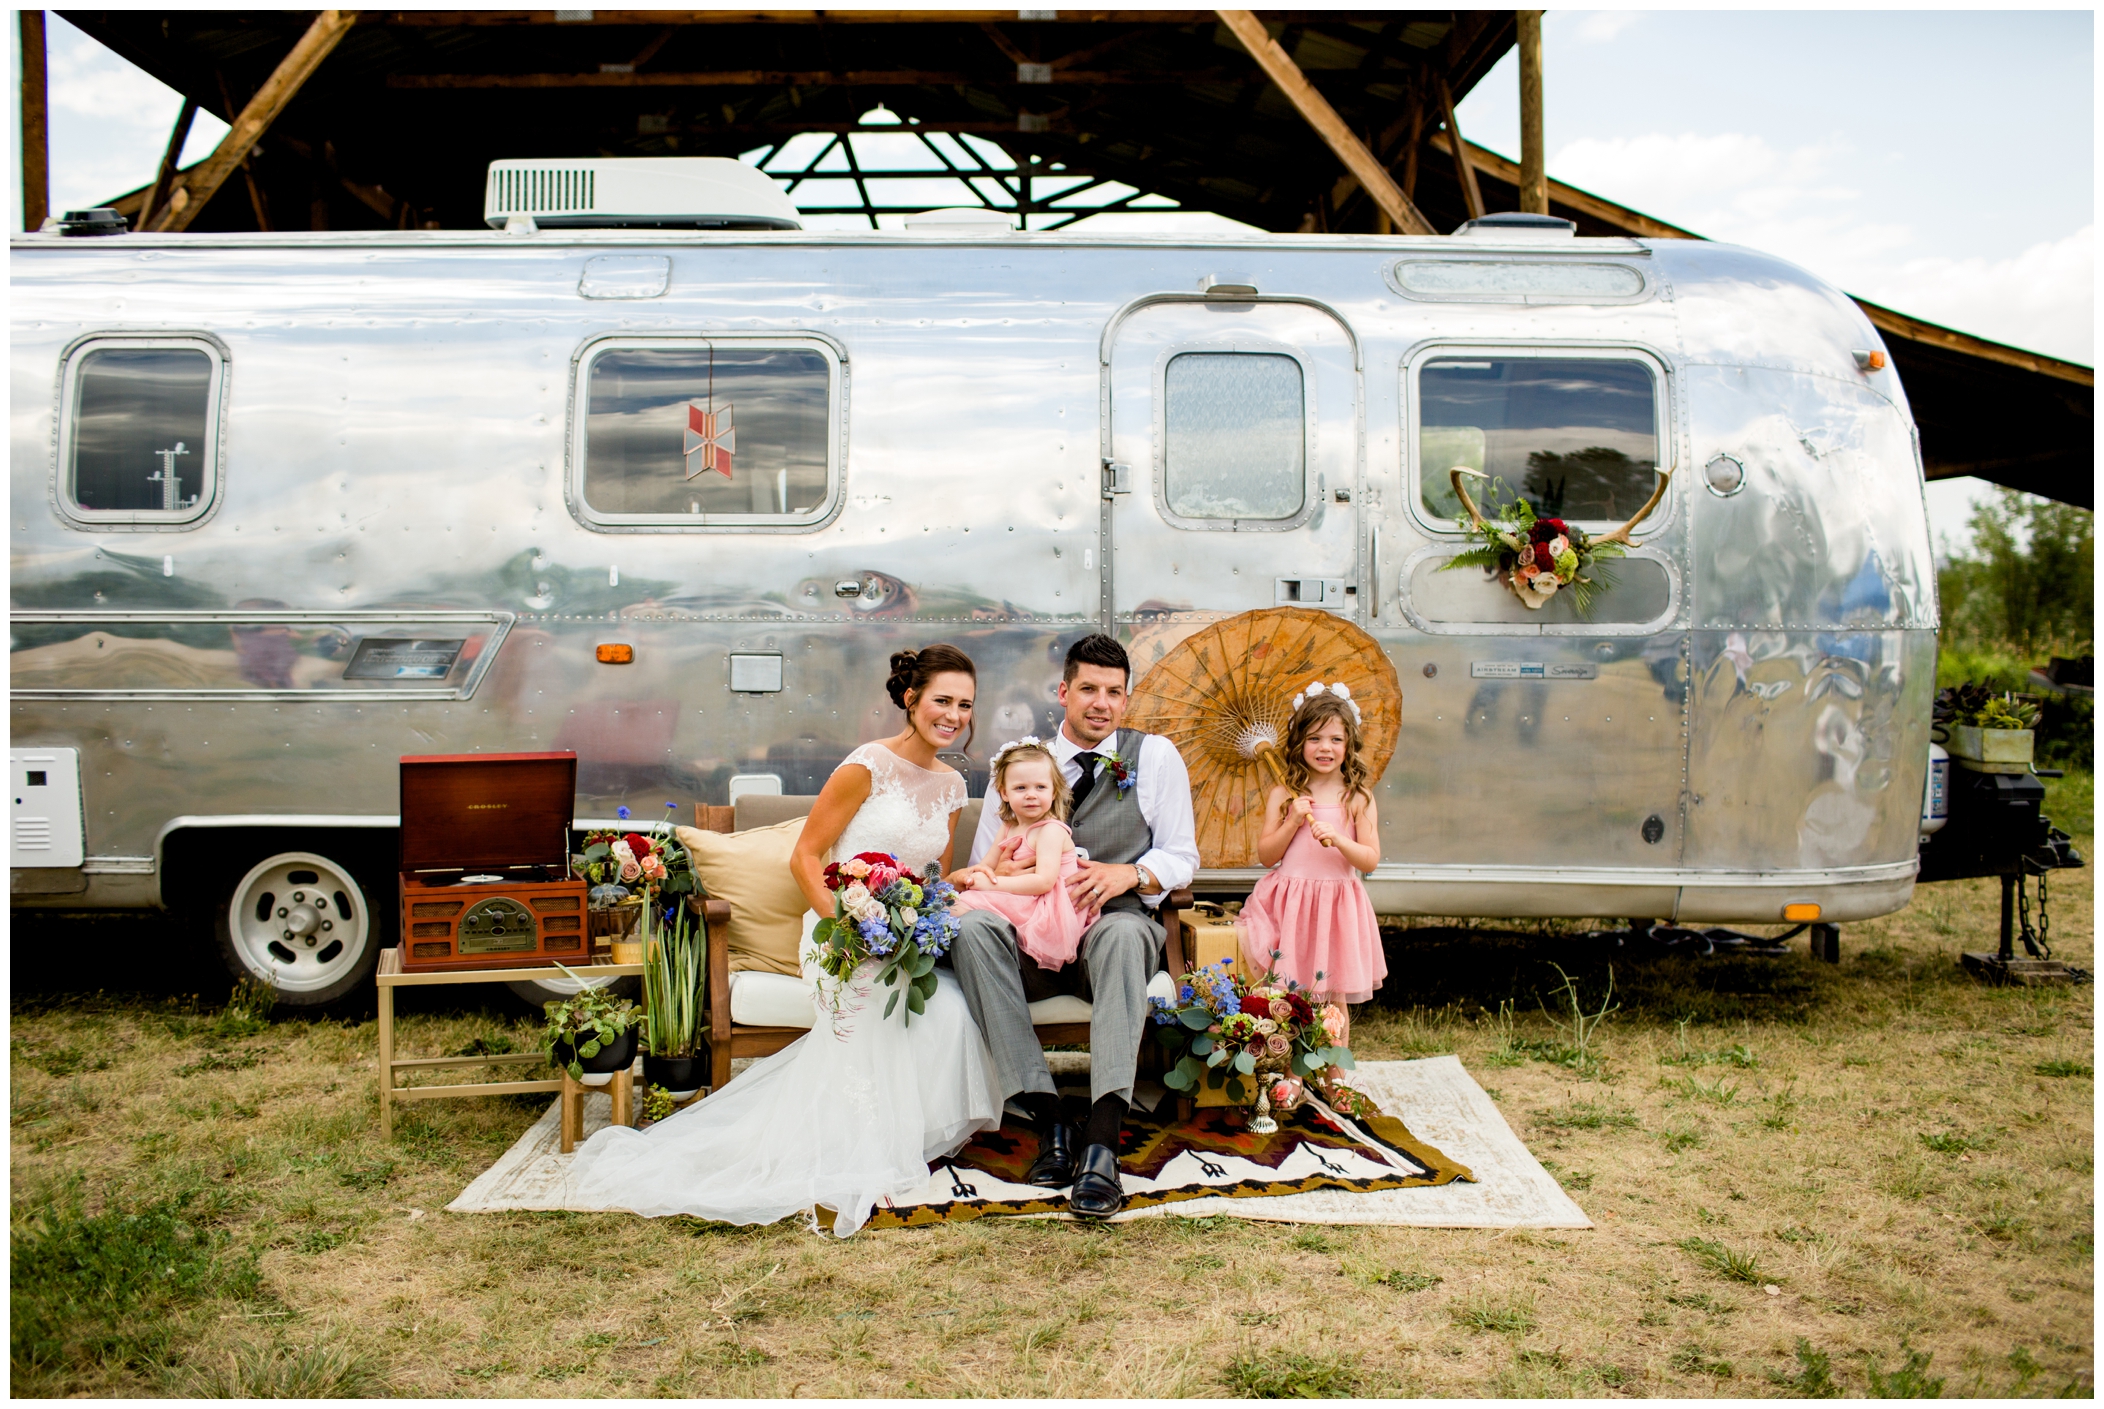 Colorado farm wedding inspiration at Lone Hawk Farm by Longmont wedding photographer Plum Pretty Photography